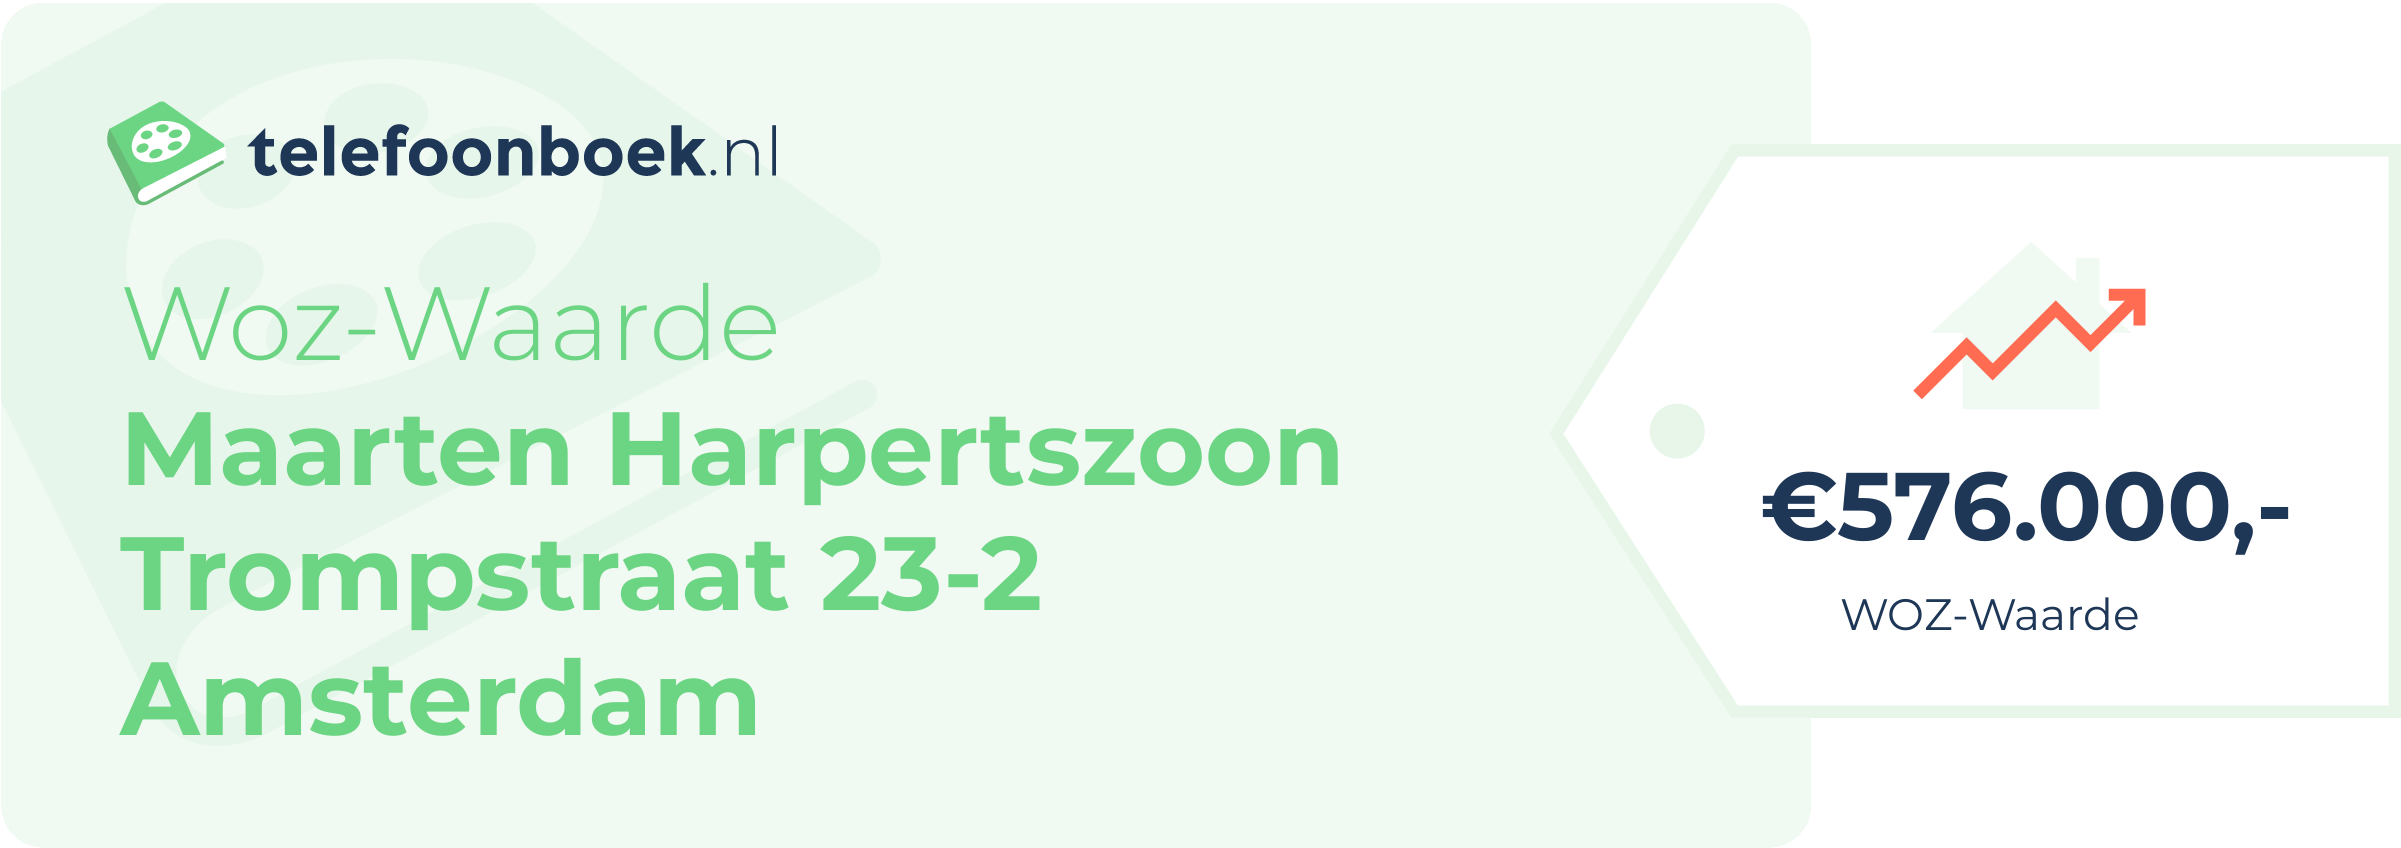 WOZ-waarde Maarten Harpertszoon Trompstraat 23-2 Amsterdam